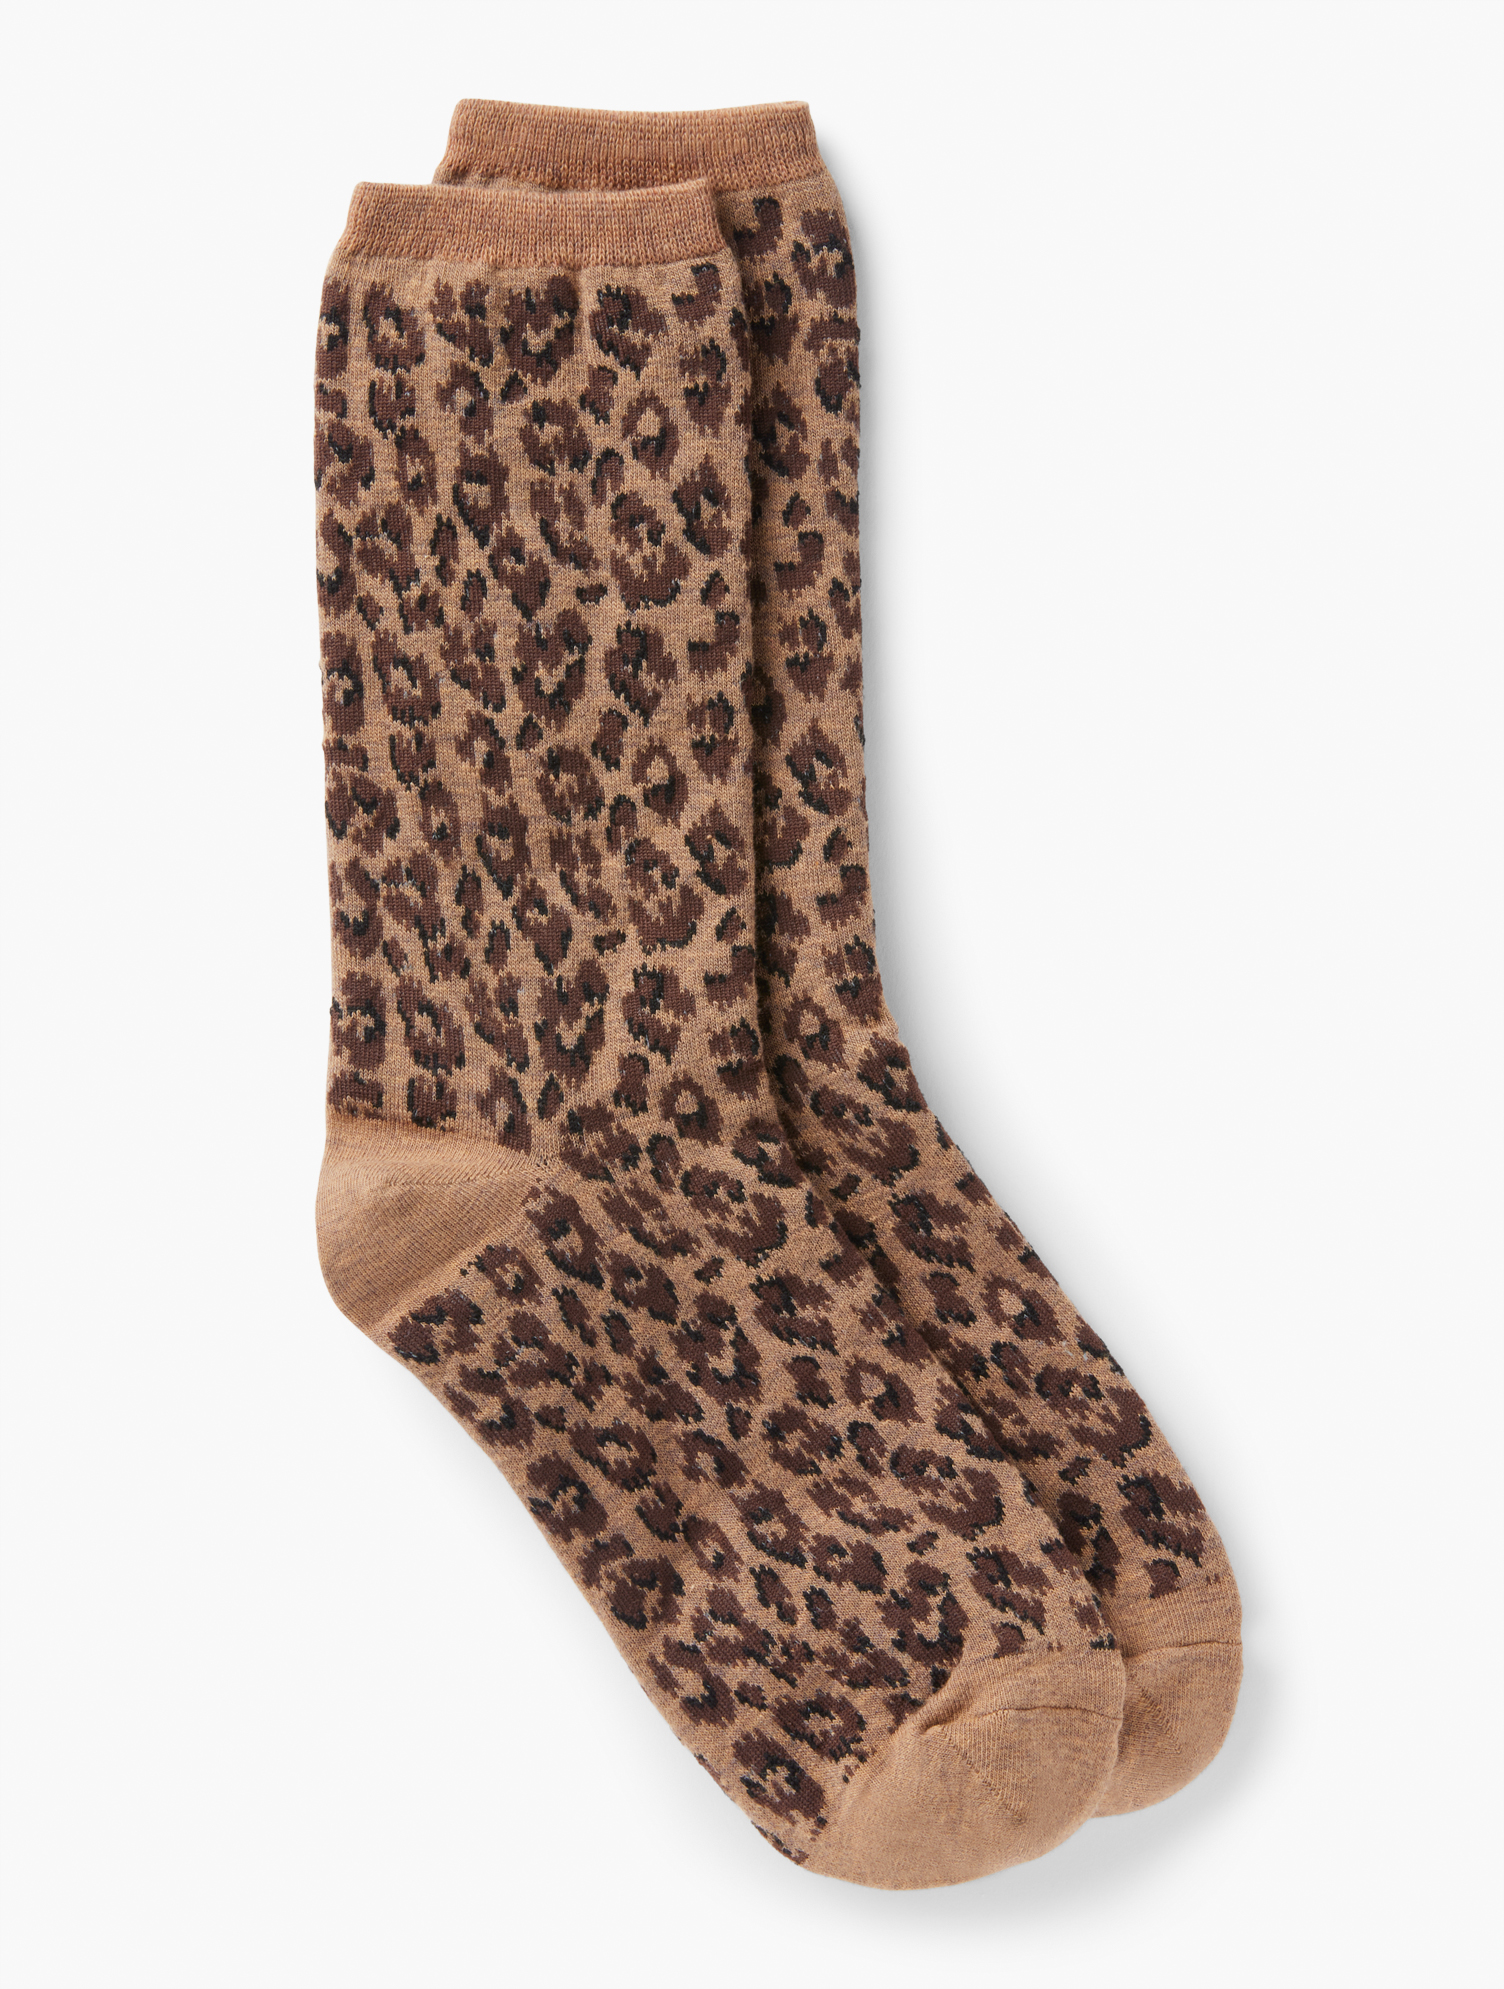 Talbots Fall Leopard Trouser Socks - Camel Heather - 001